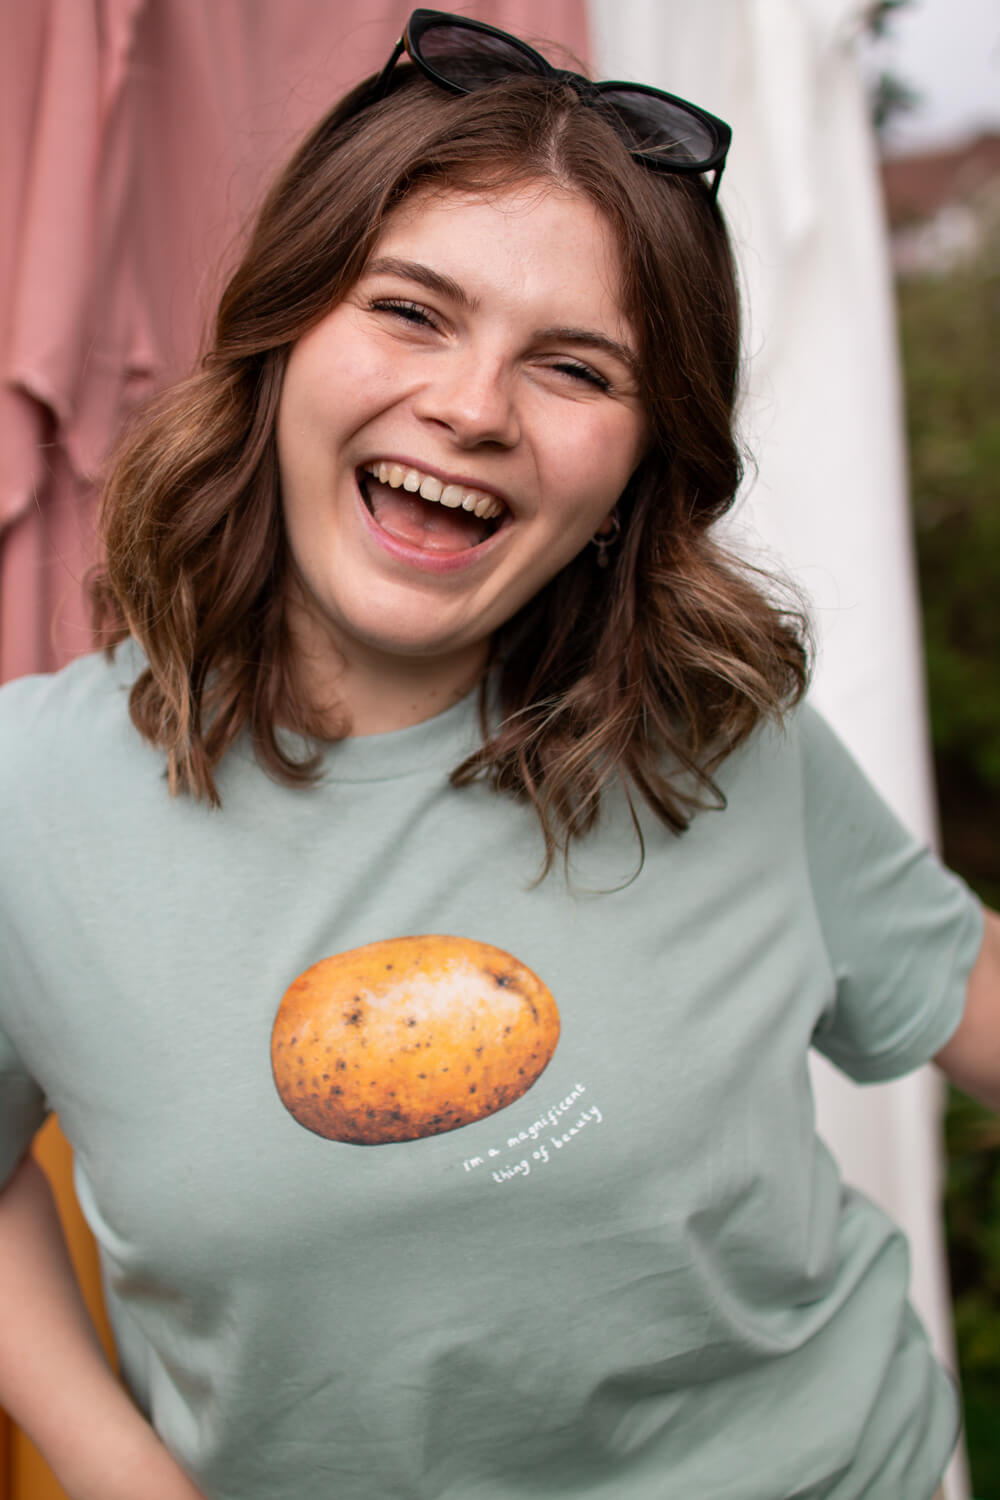 Magnificent potato t-shirt